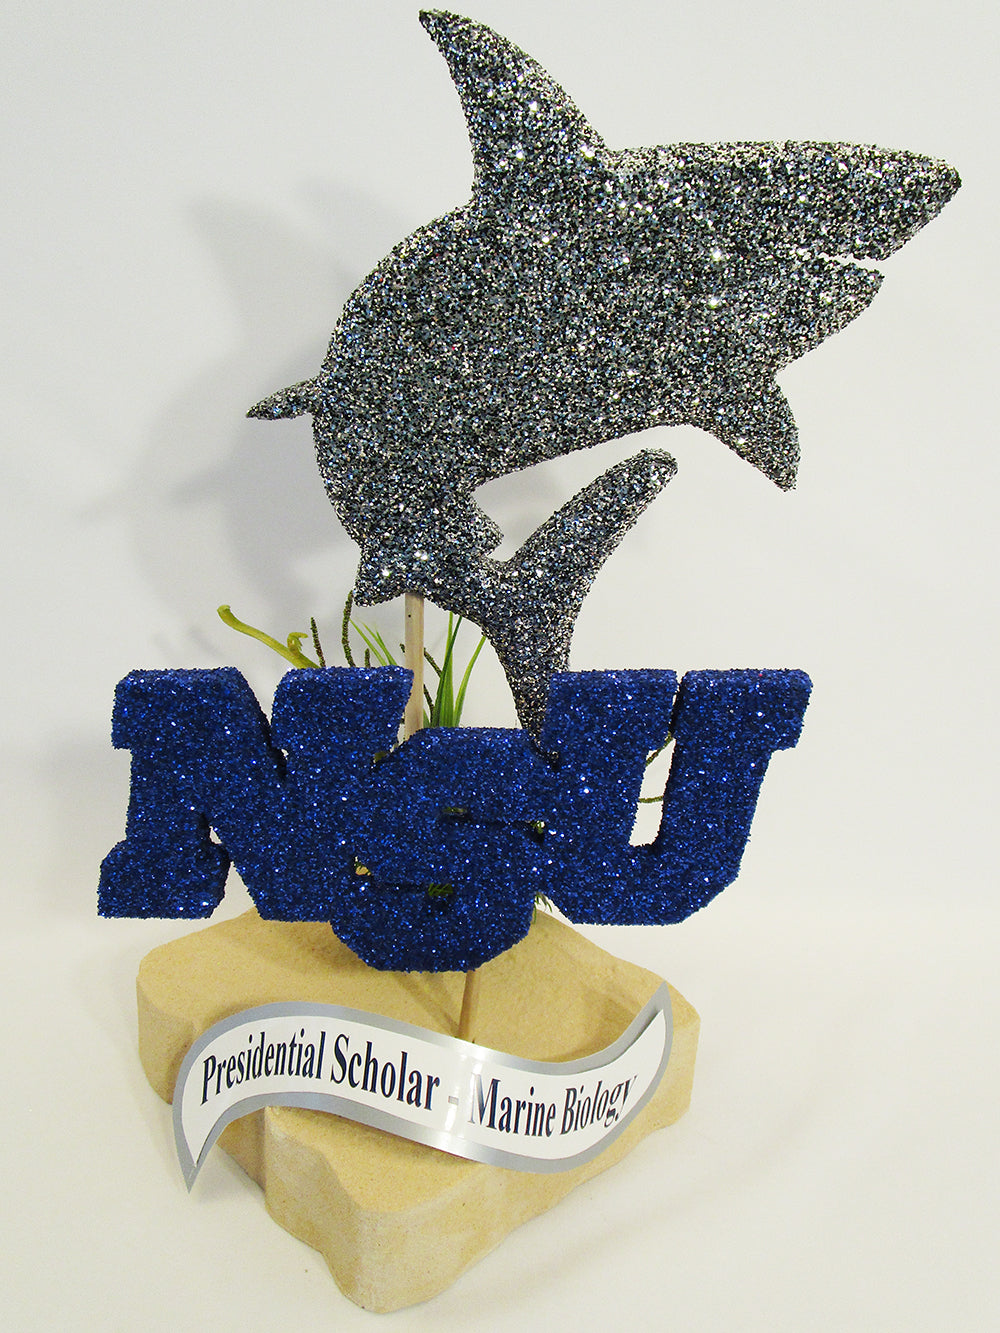 Sharks in the Pros - Nova Southeastern University Athletics